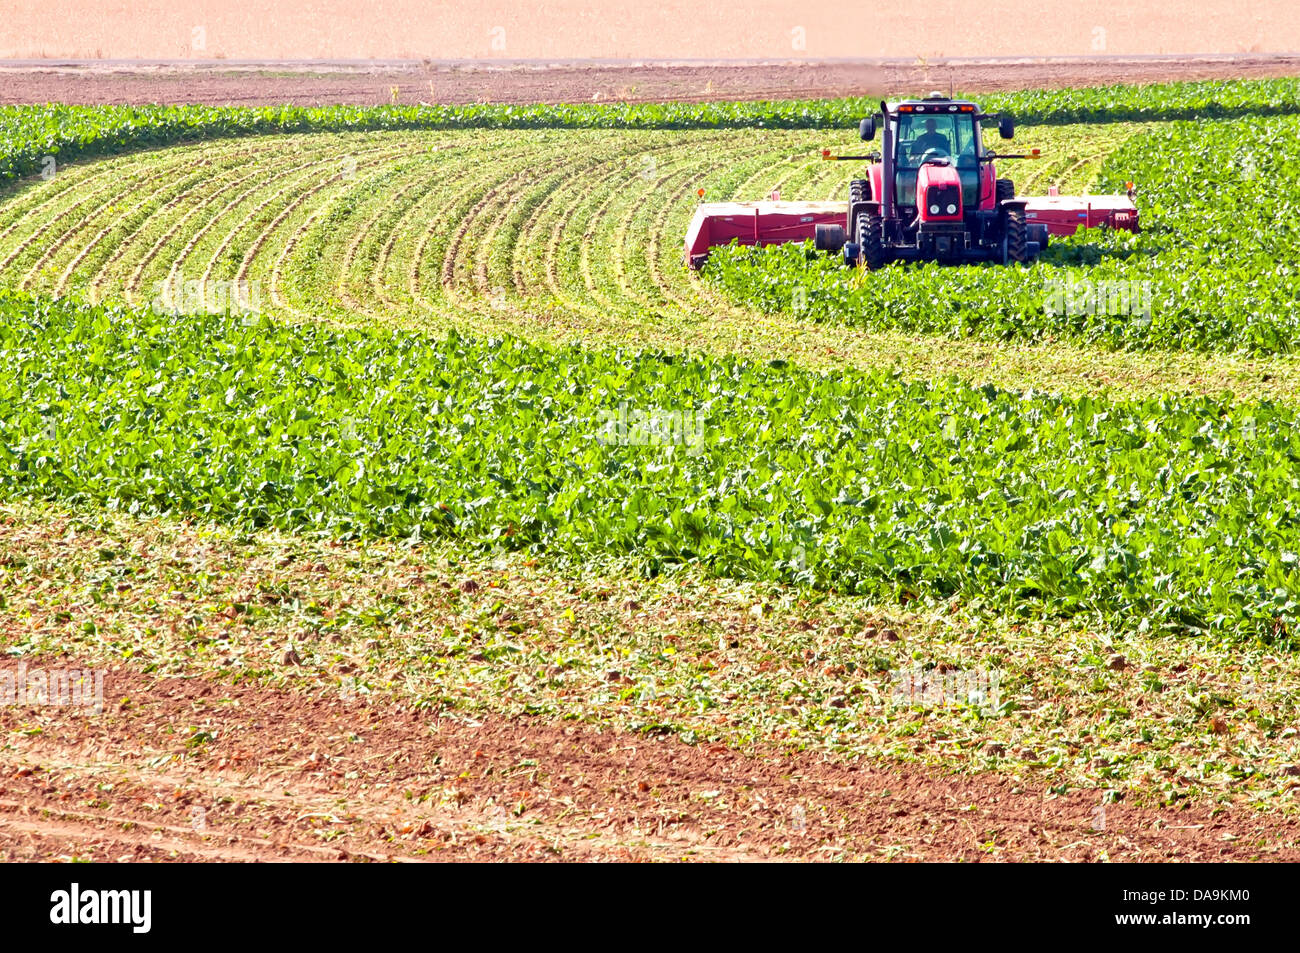 Harvesting sugar beets on a rural northern Colorado, USA farm. Stock Photo